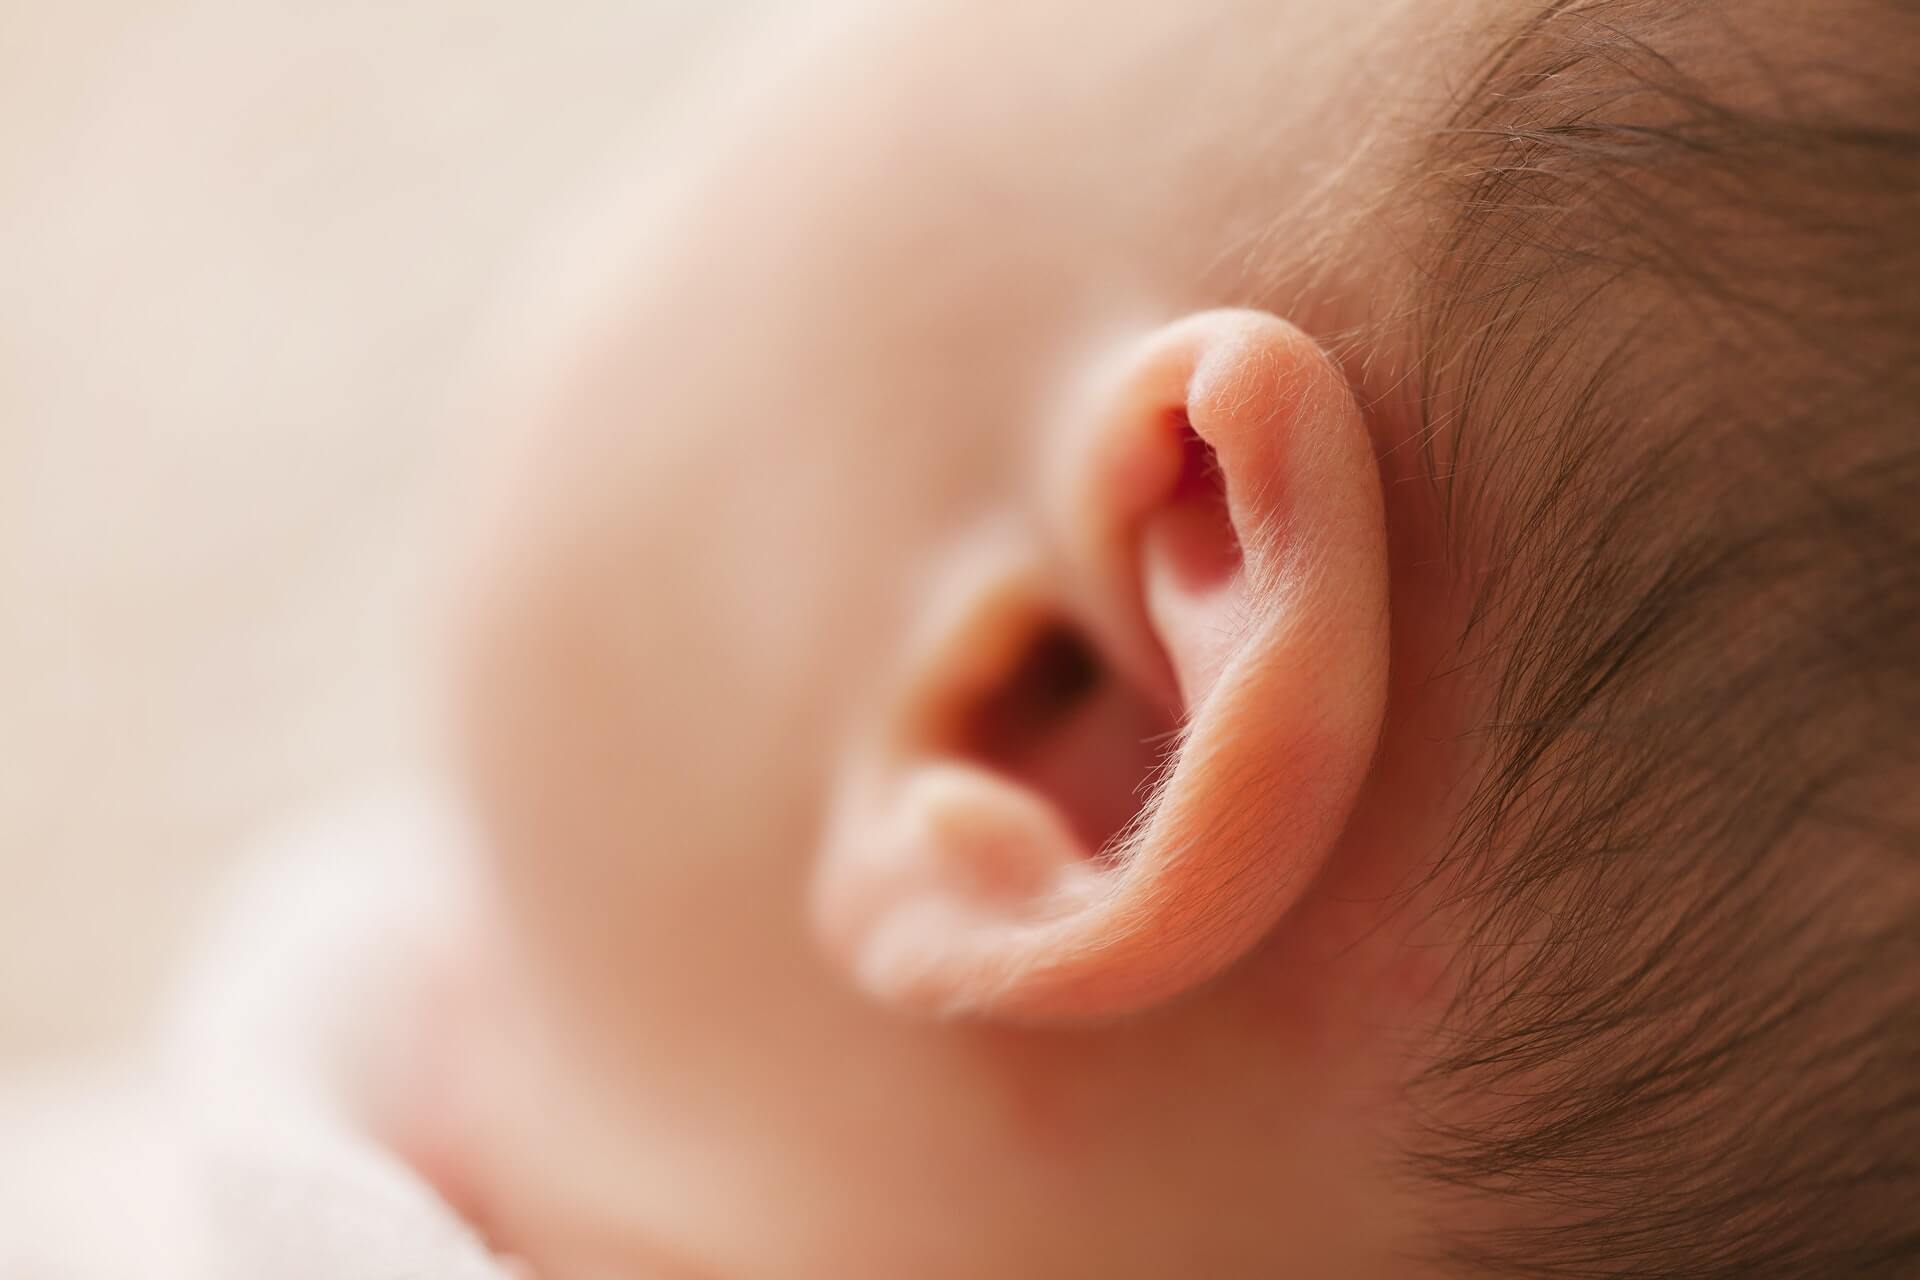 Child's ear, hearing